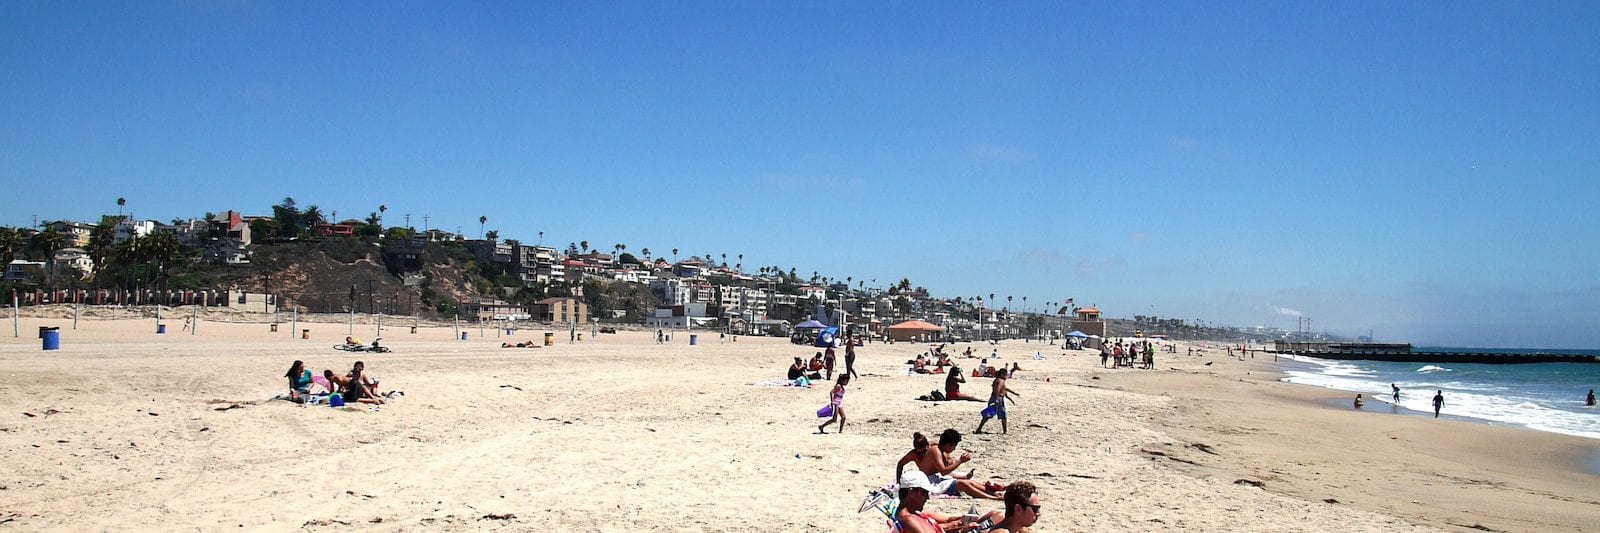 Playa Del Rey Beach, Los Angeles